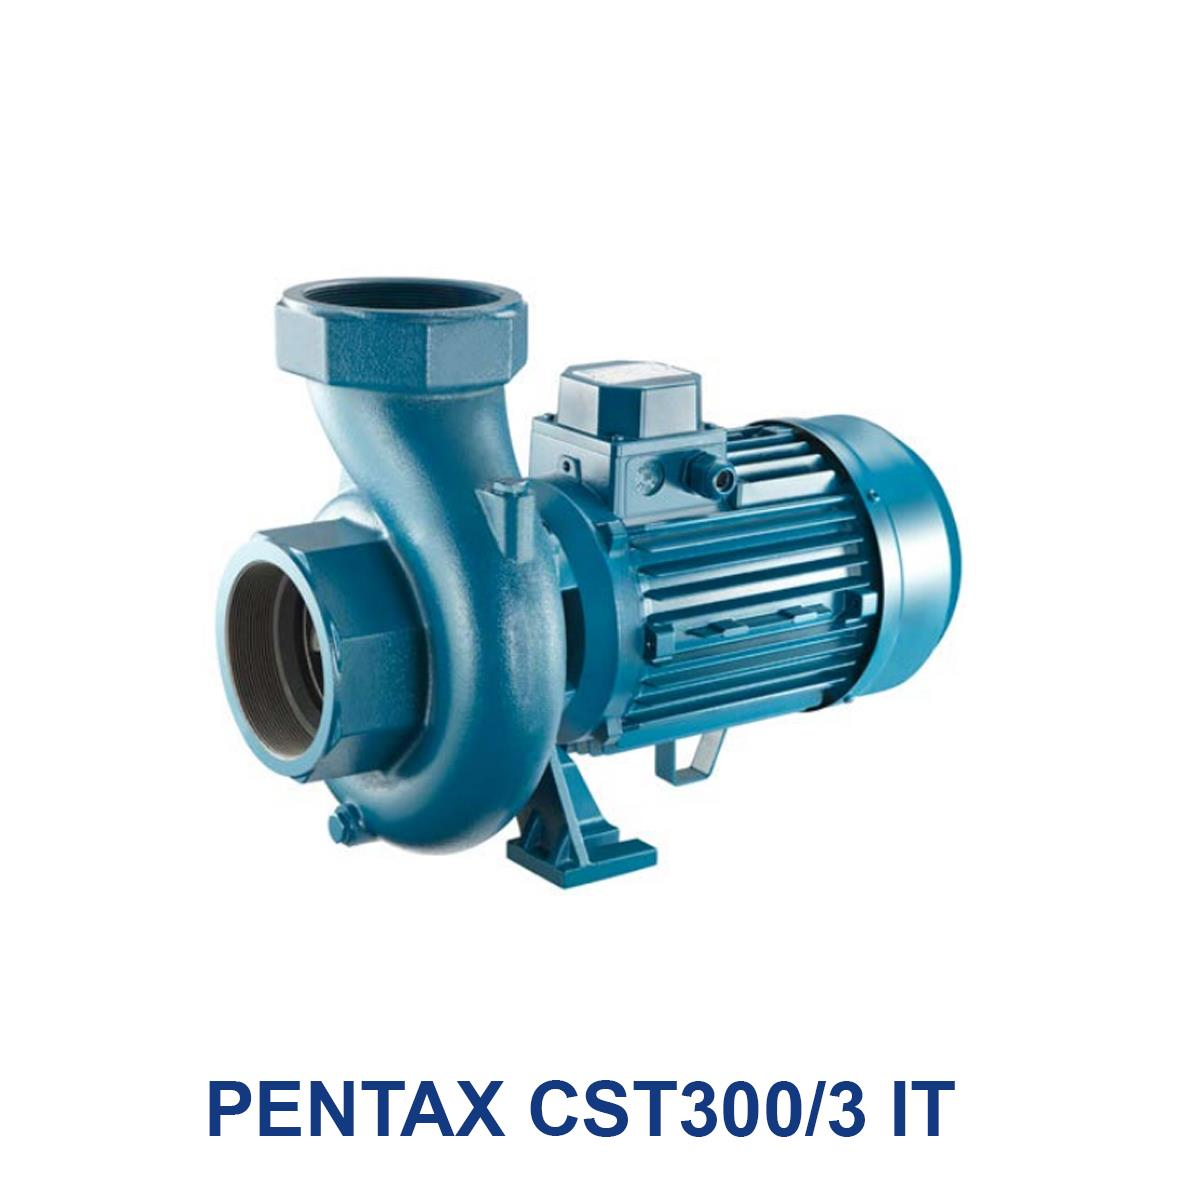 PENTAX-CST300-3-IT